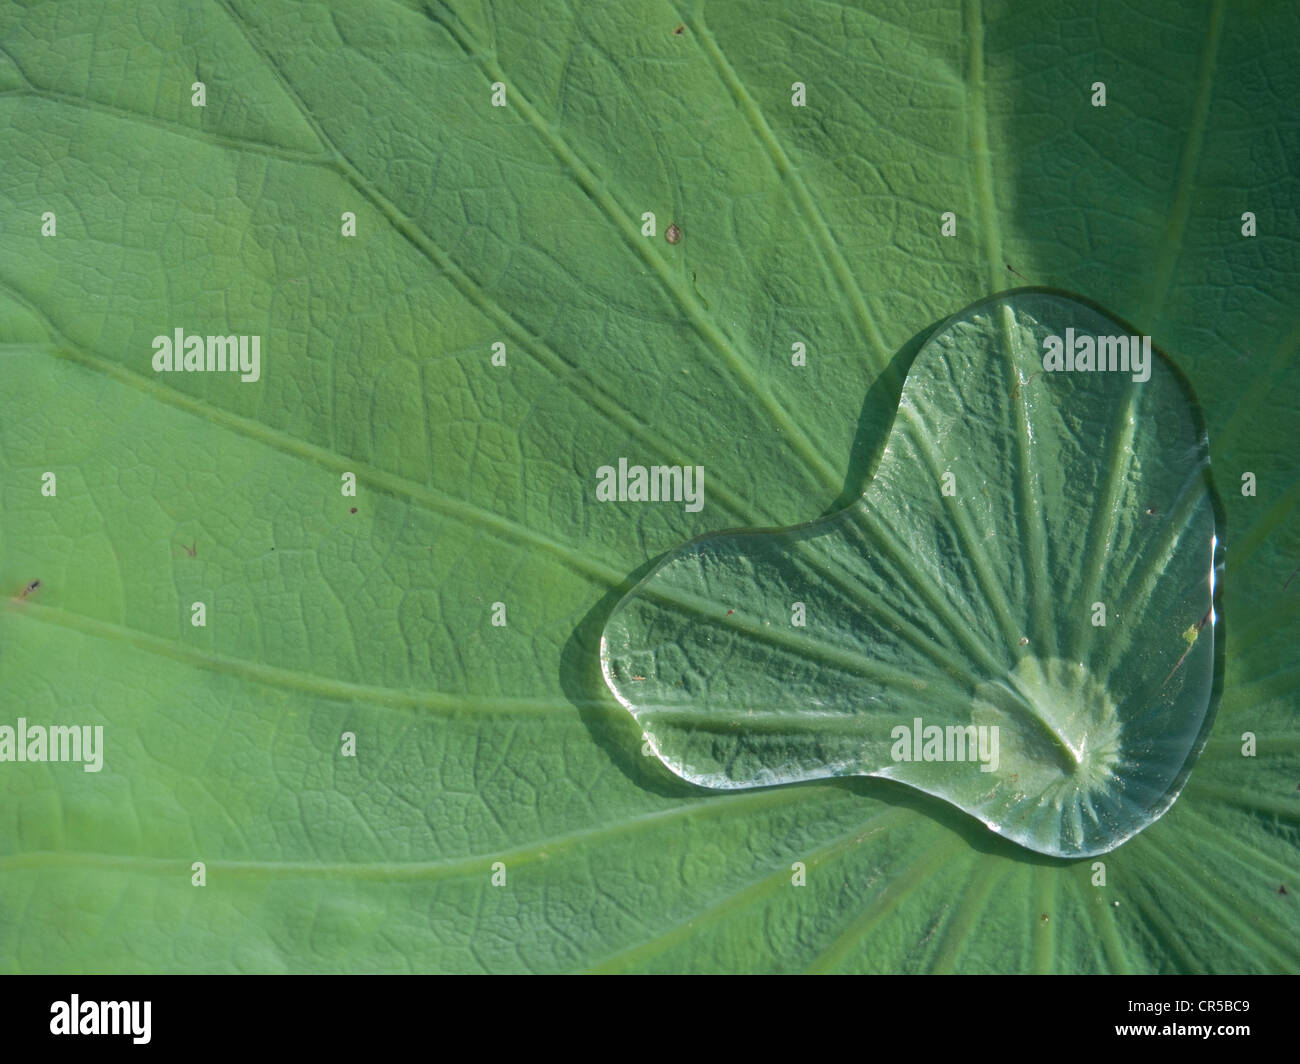 El agua de lluvia recogida por la hoja un loto (Nelumbo nucifera), Srinagar, Jammu y Cachemira, la India, Asia Foto de stock